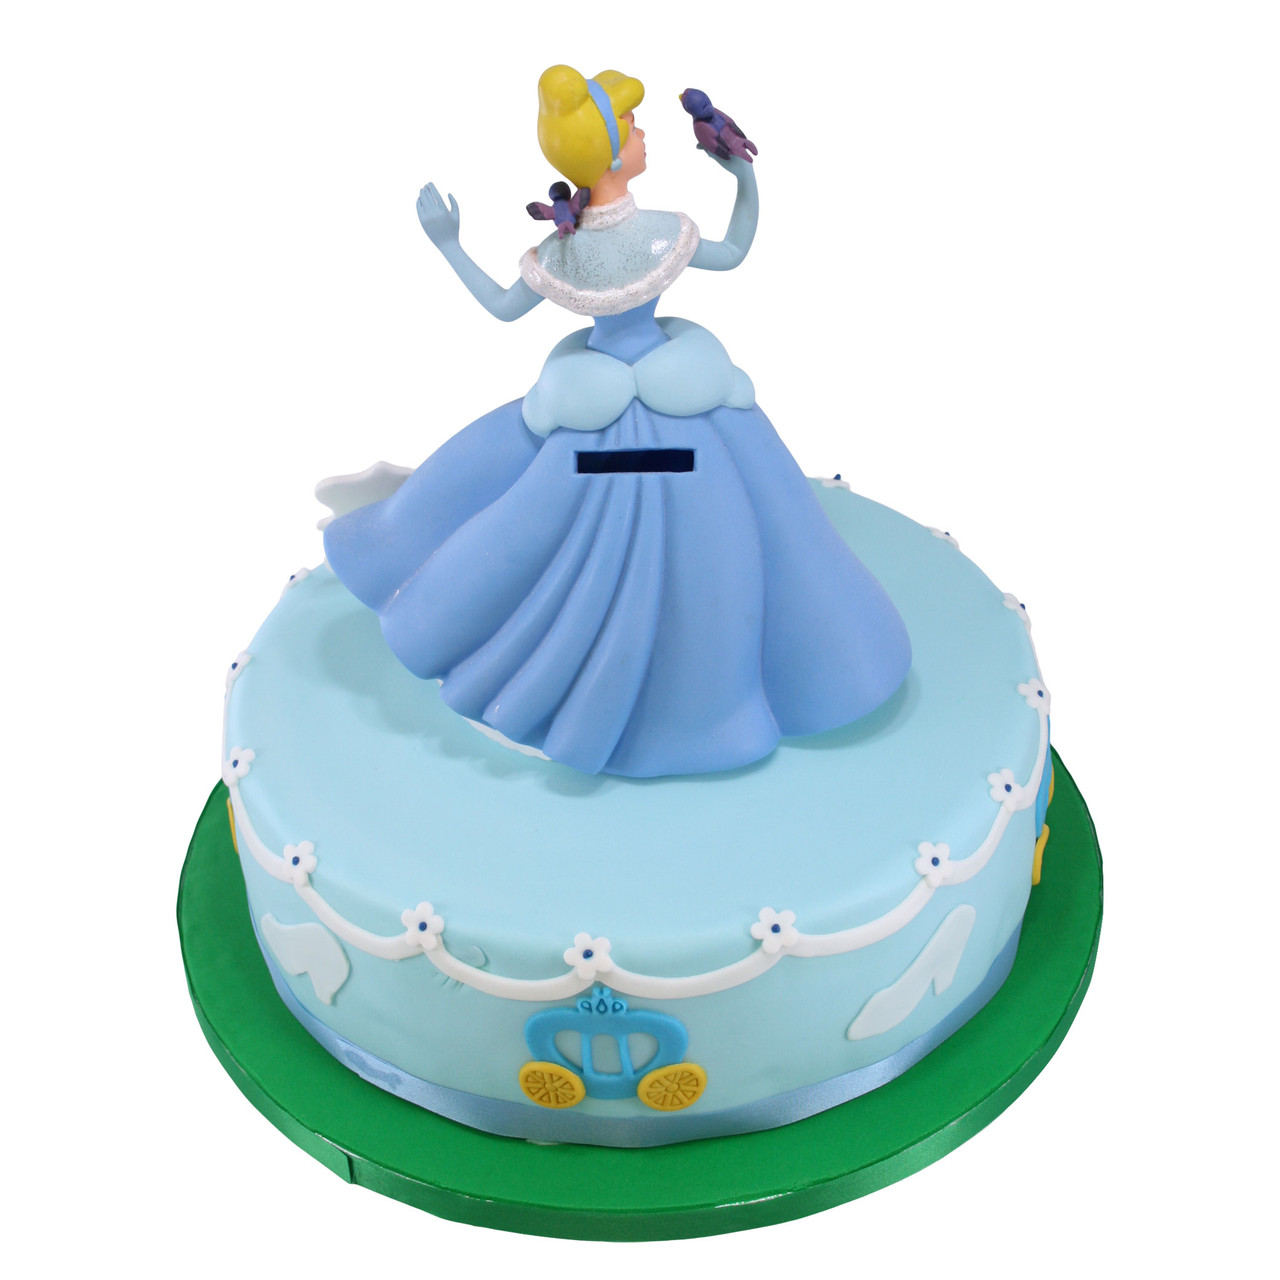 Cinderella Doll Dress Cake Tutorial - Grace Like Rain Blog